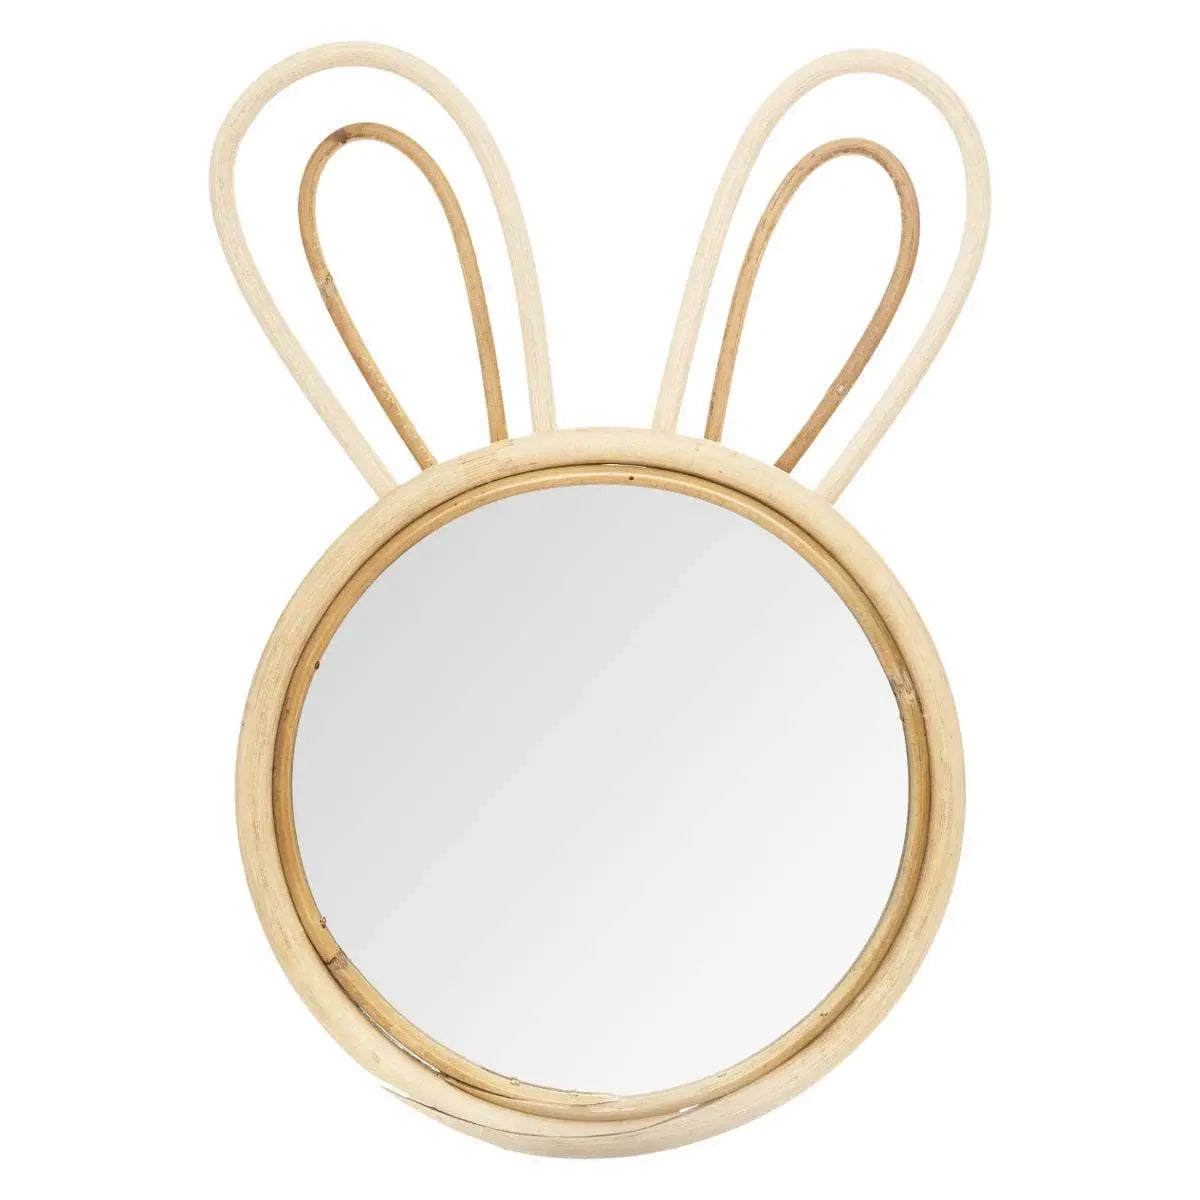 rabbit mirror